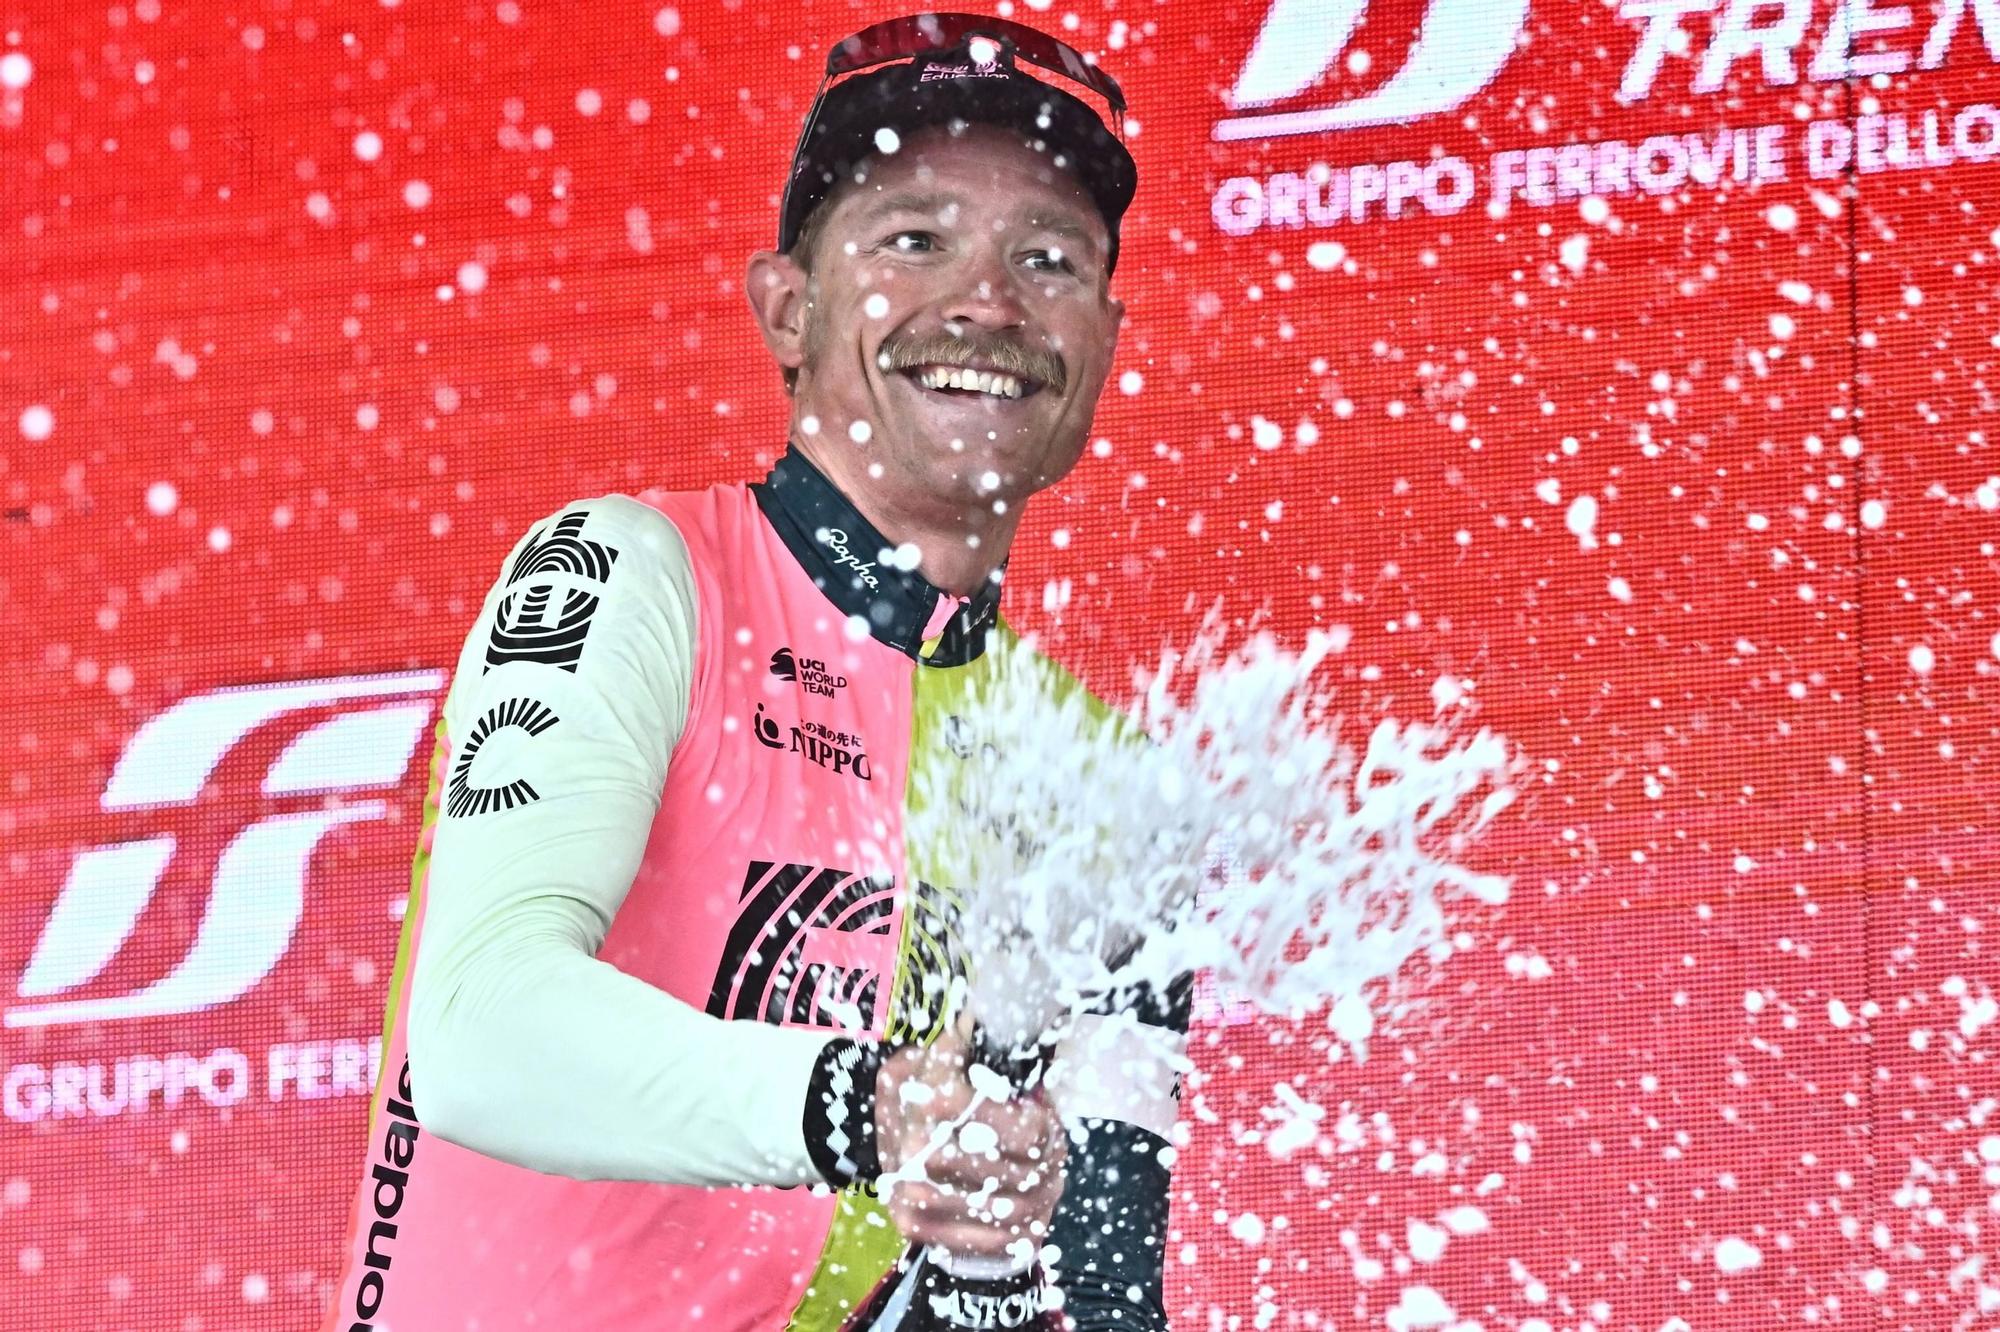 Giro d'Italia - 10th stage